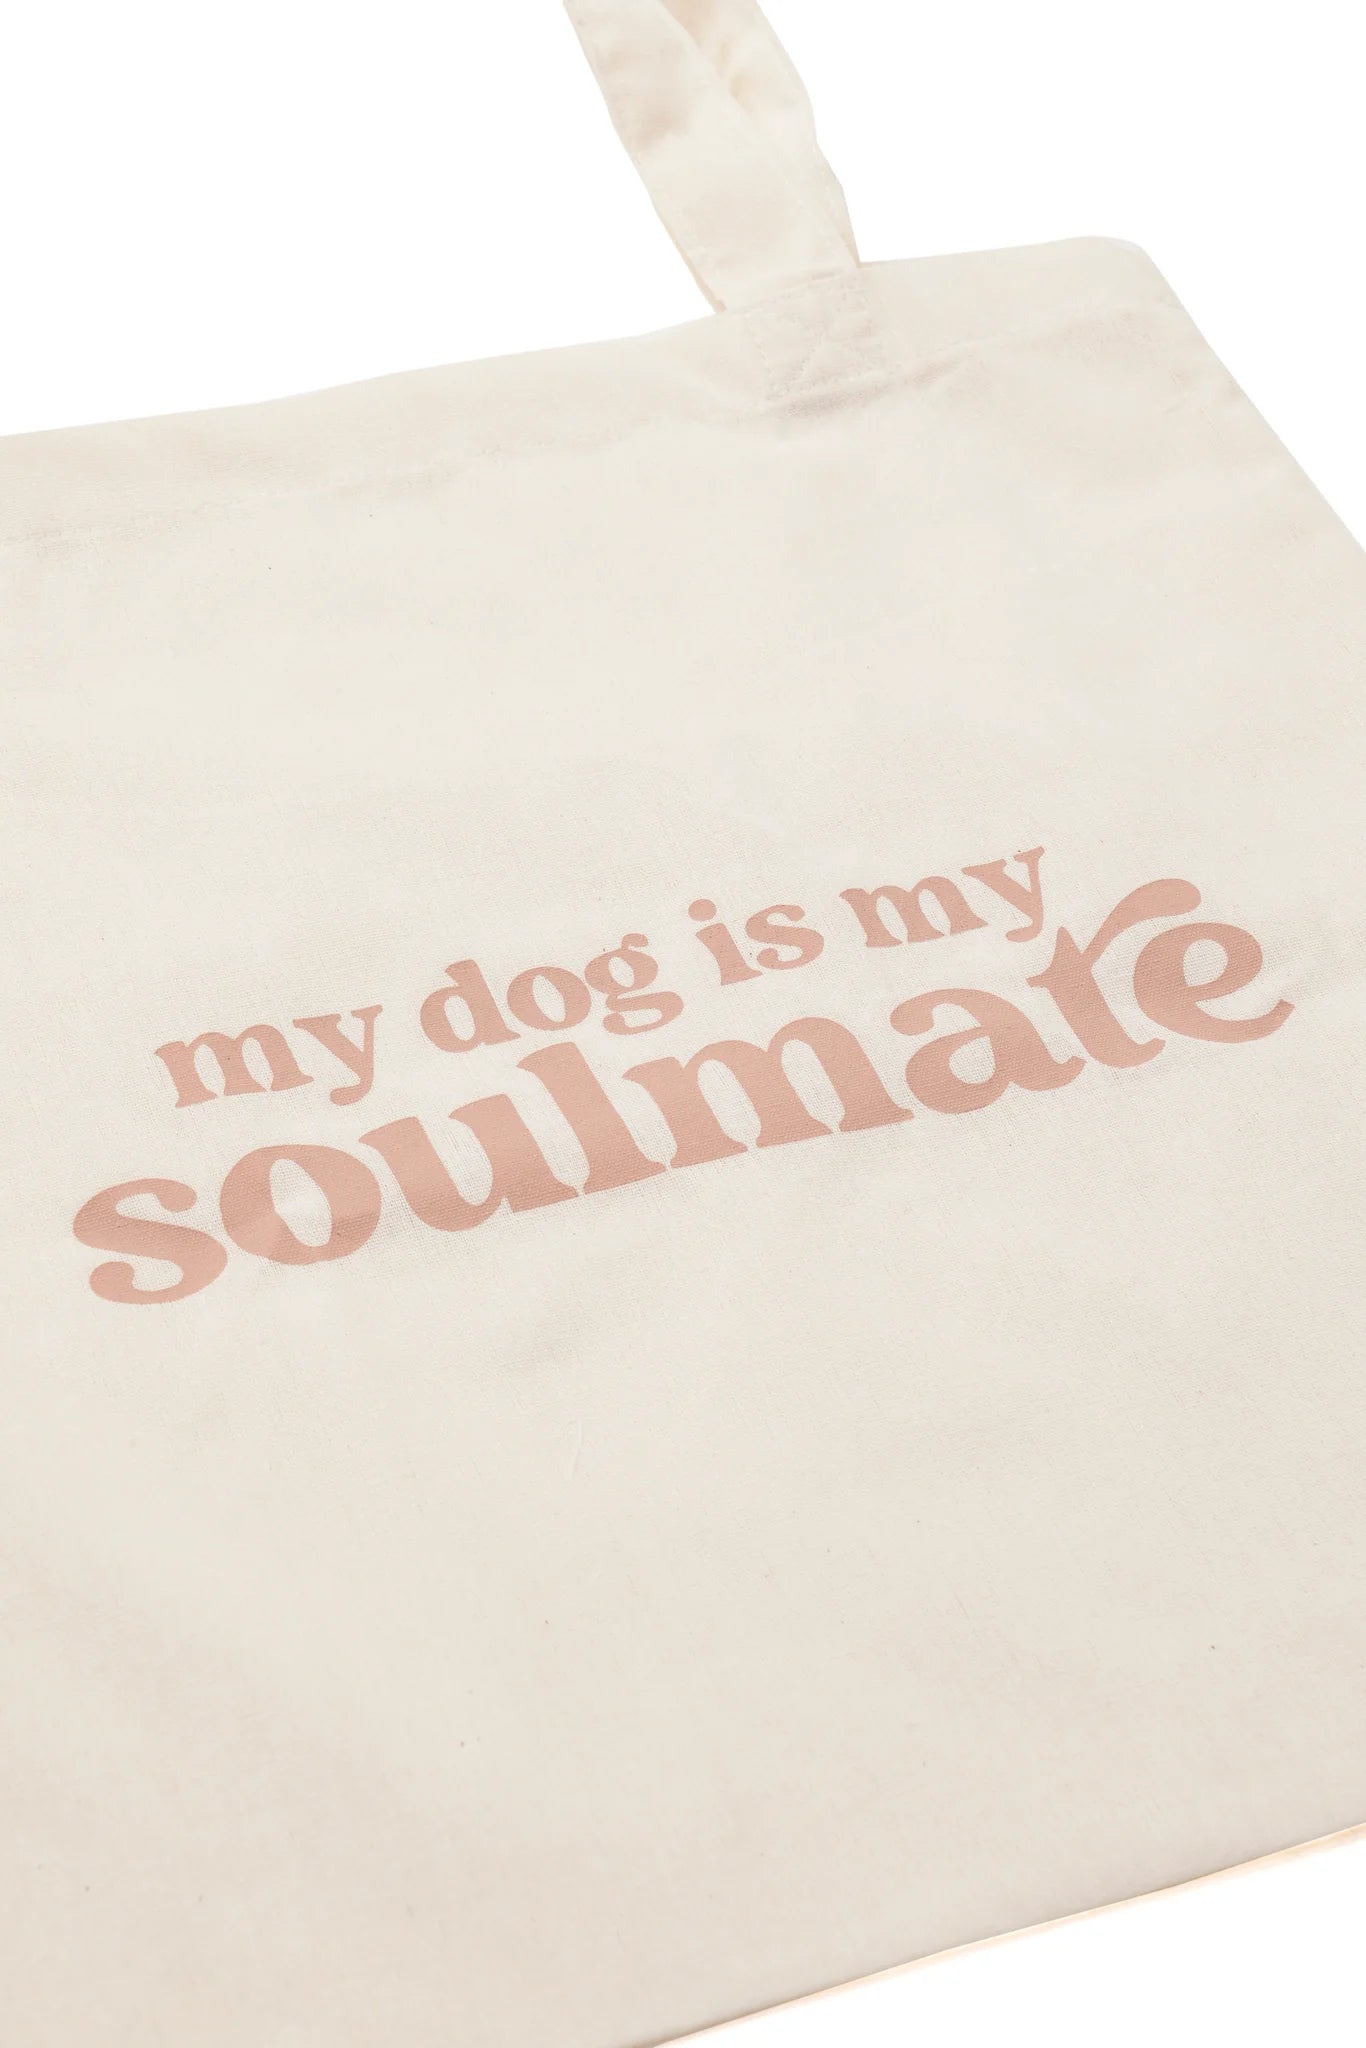 Tote Bag - My dog is my soulmate